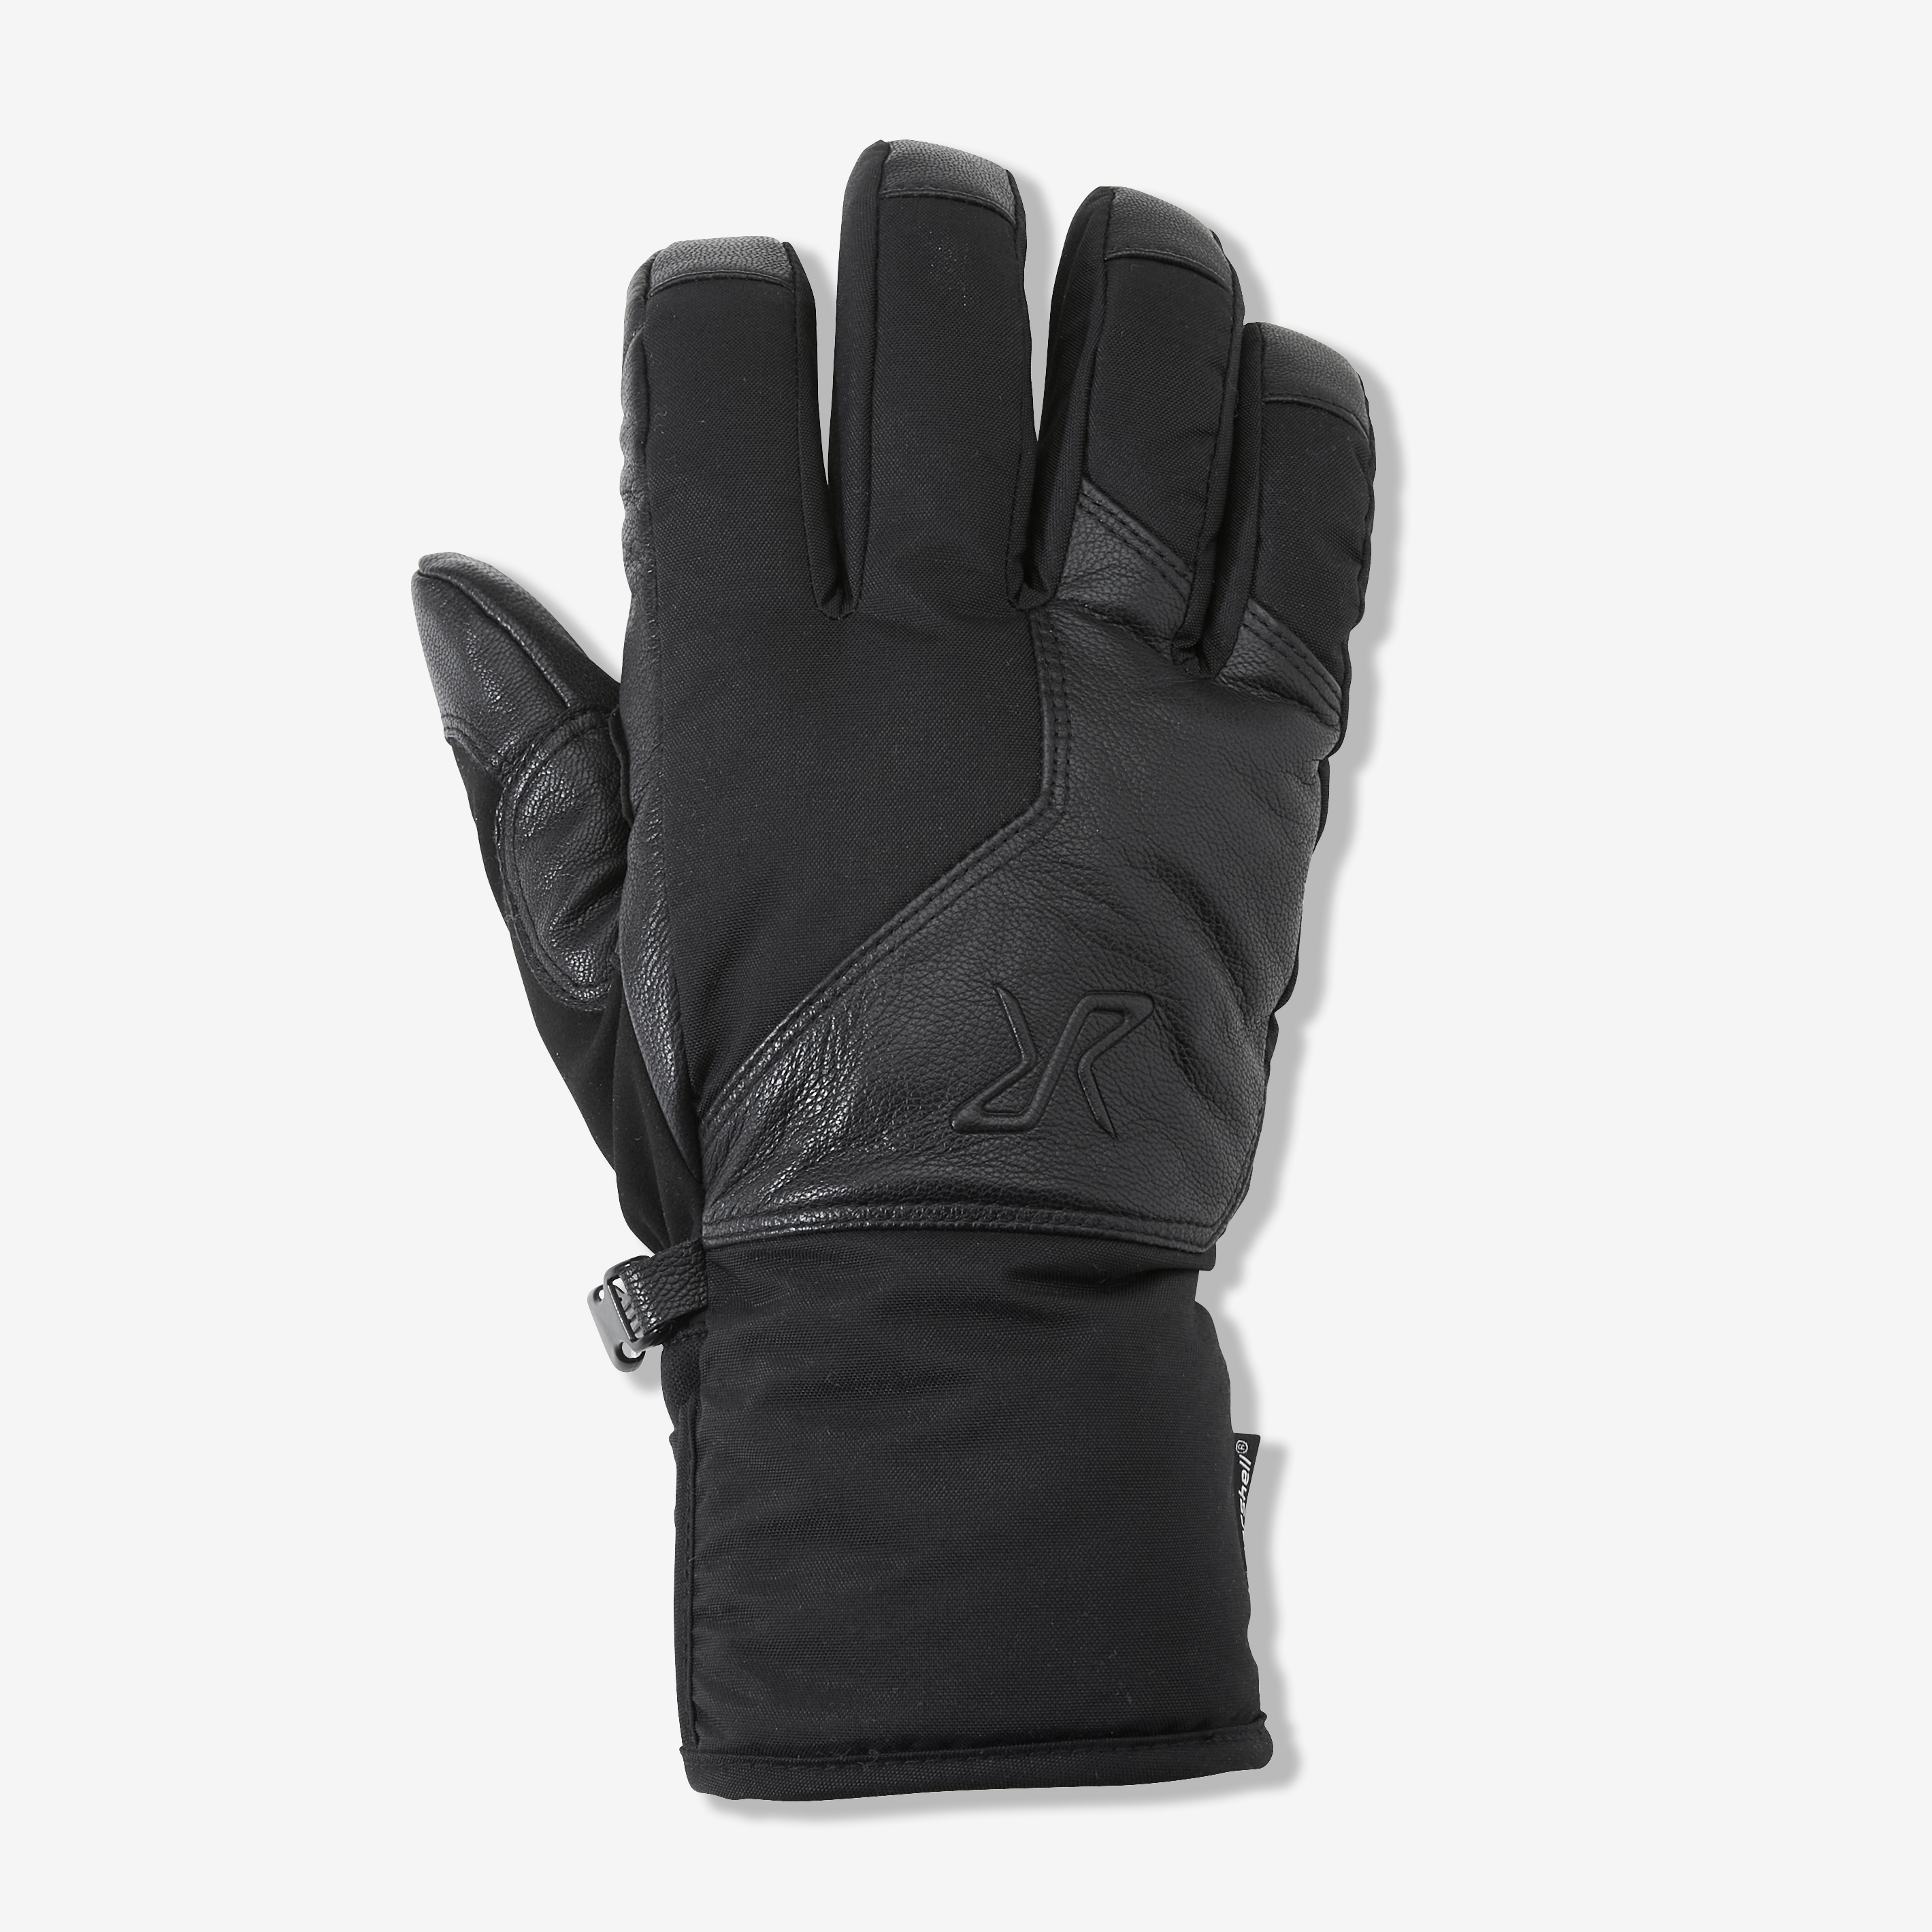 Ascent Glove Black